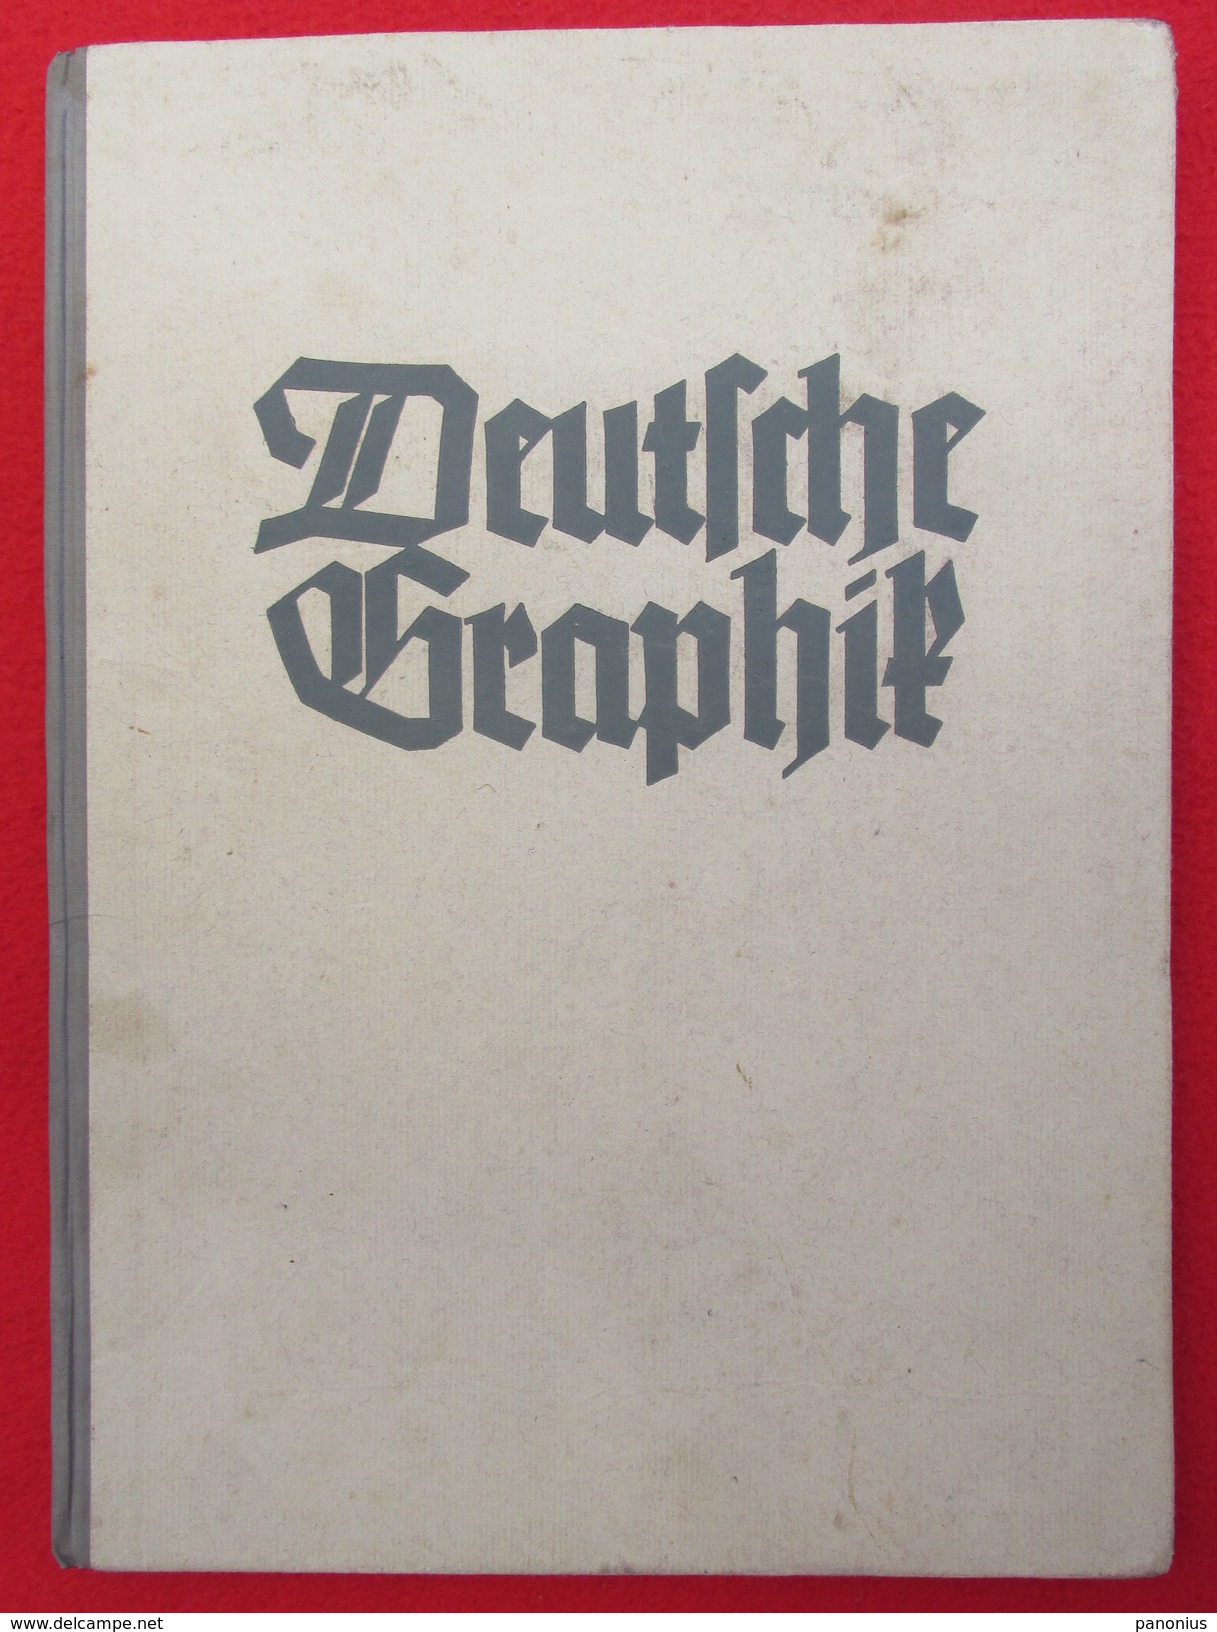 DEUTSCHE GRAPHIK - Art Book, Monograph, Painting, Period III Reich, Berlin, Germany - Grafica & Design